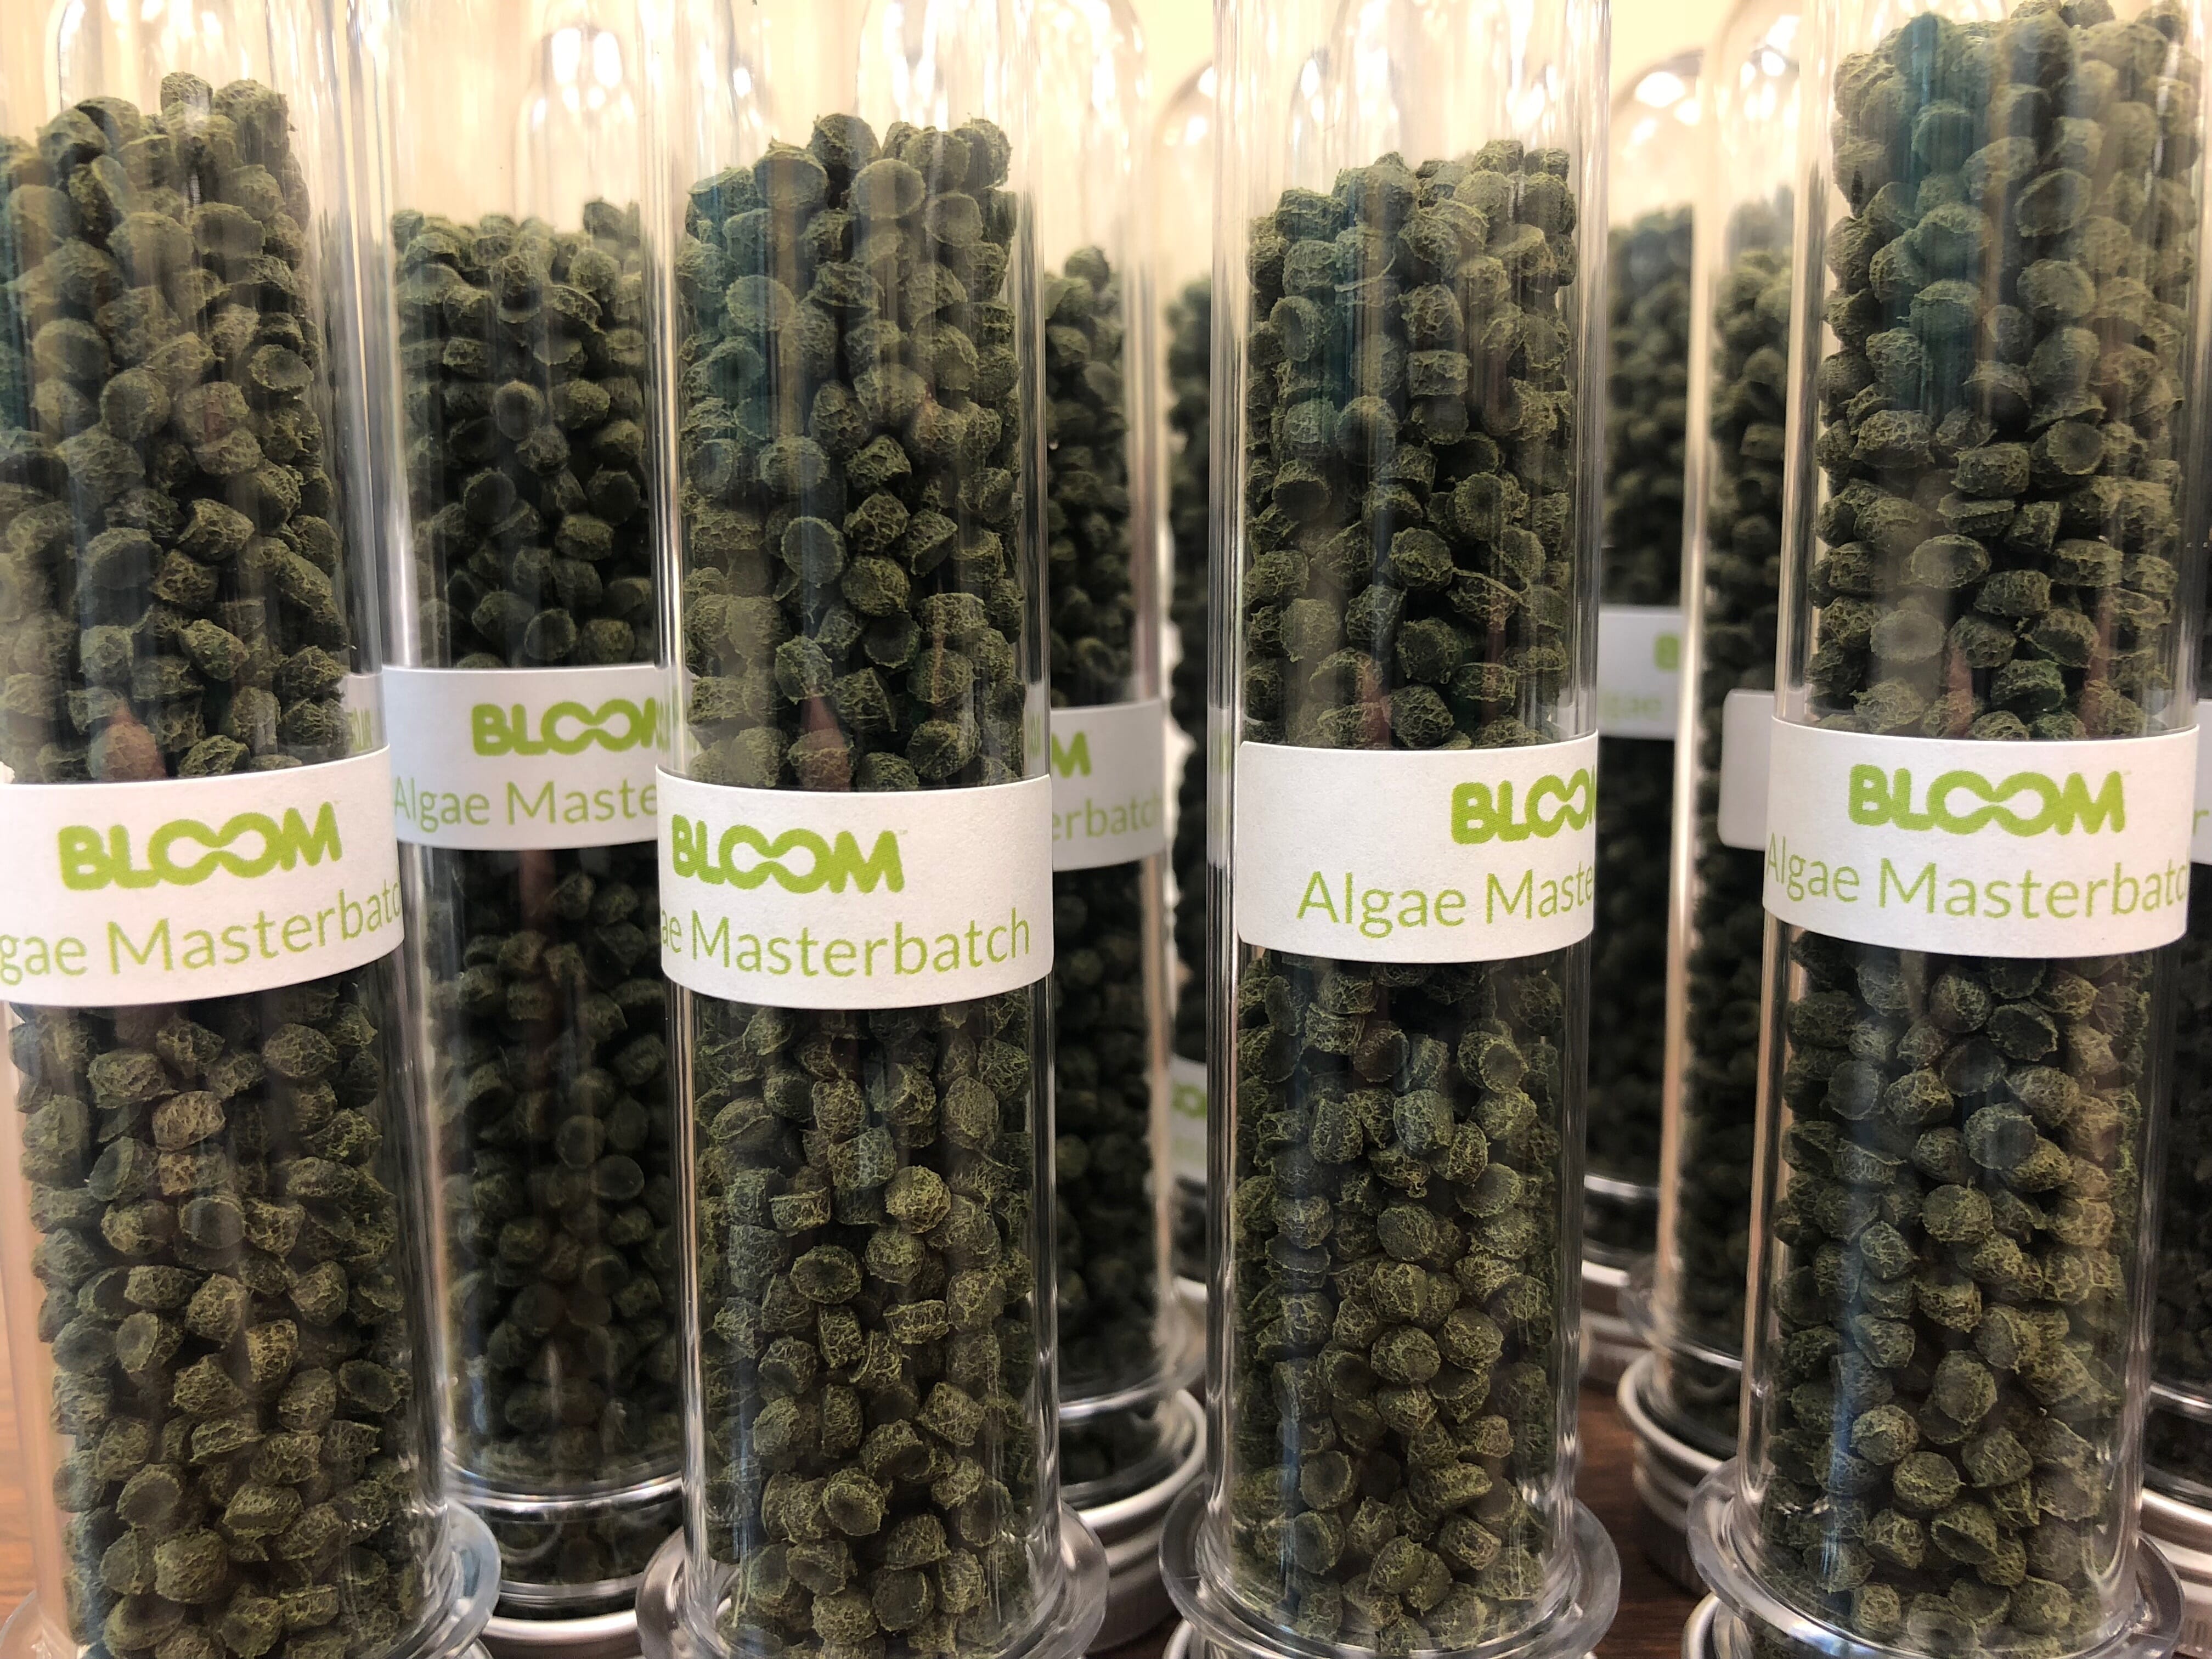 Bloom Algae